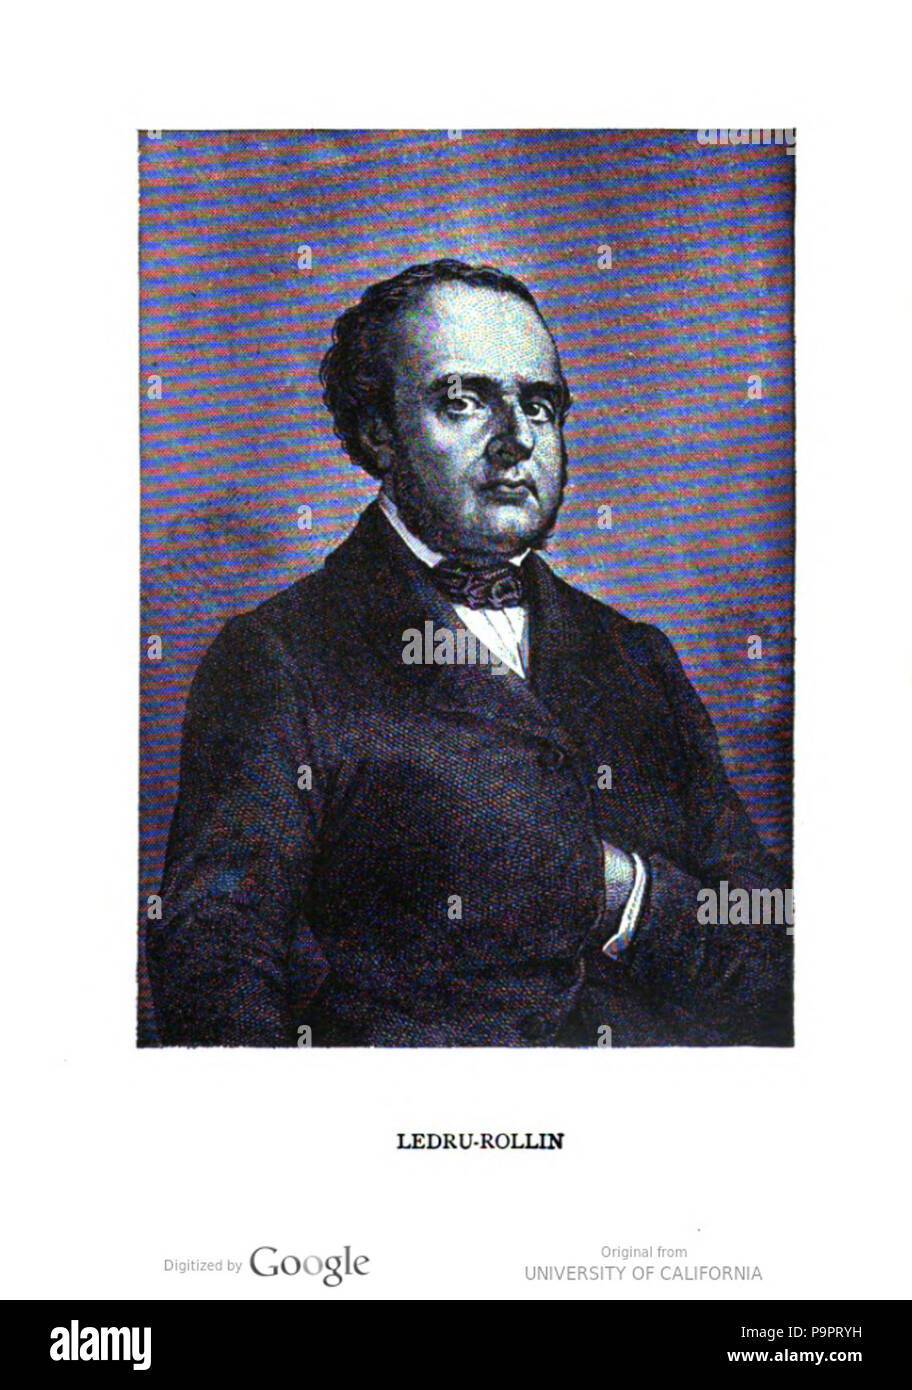 113 Alexandre Auguste Ledru-Rollin Stock Photo